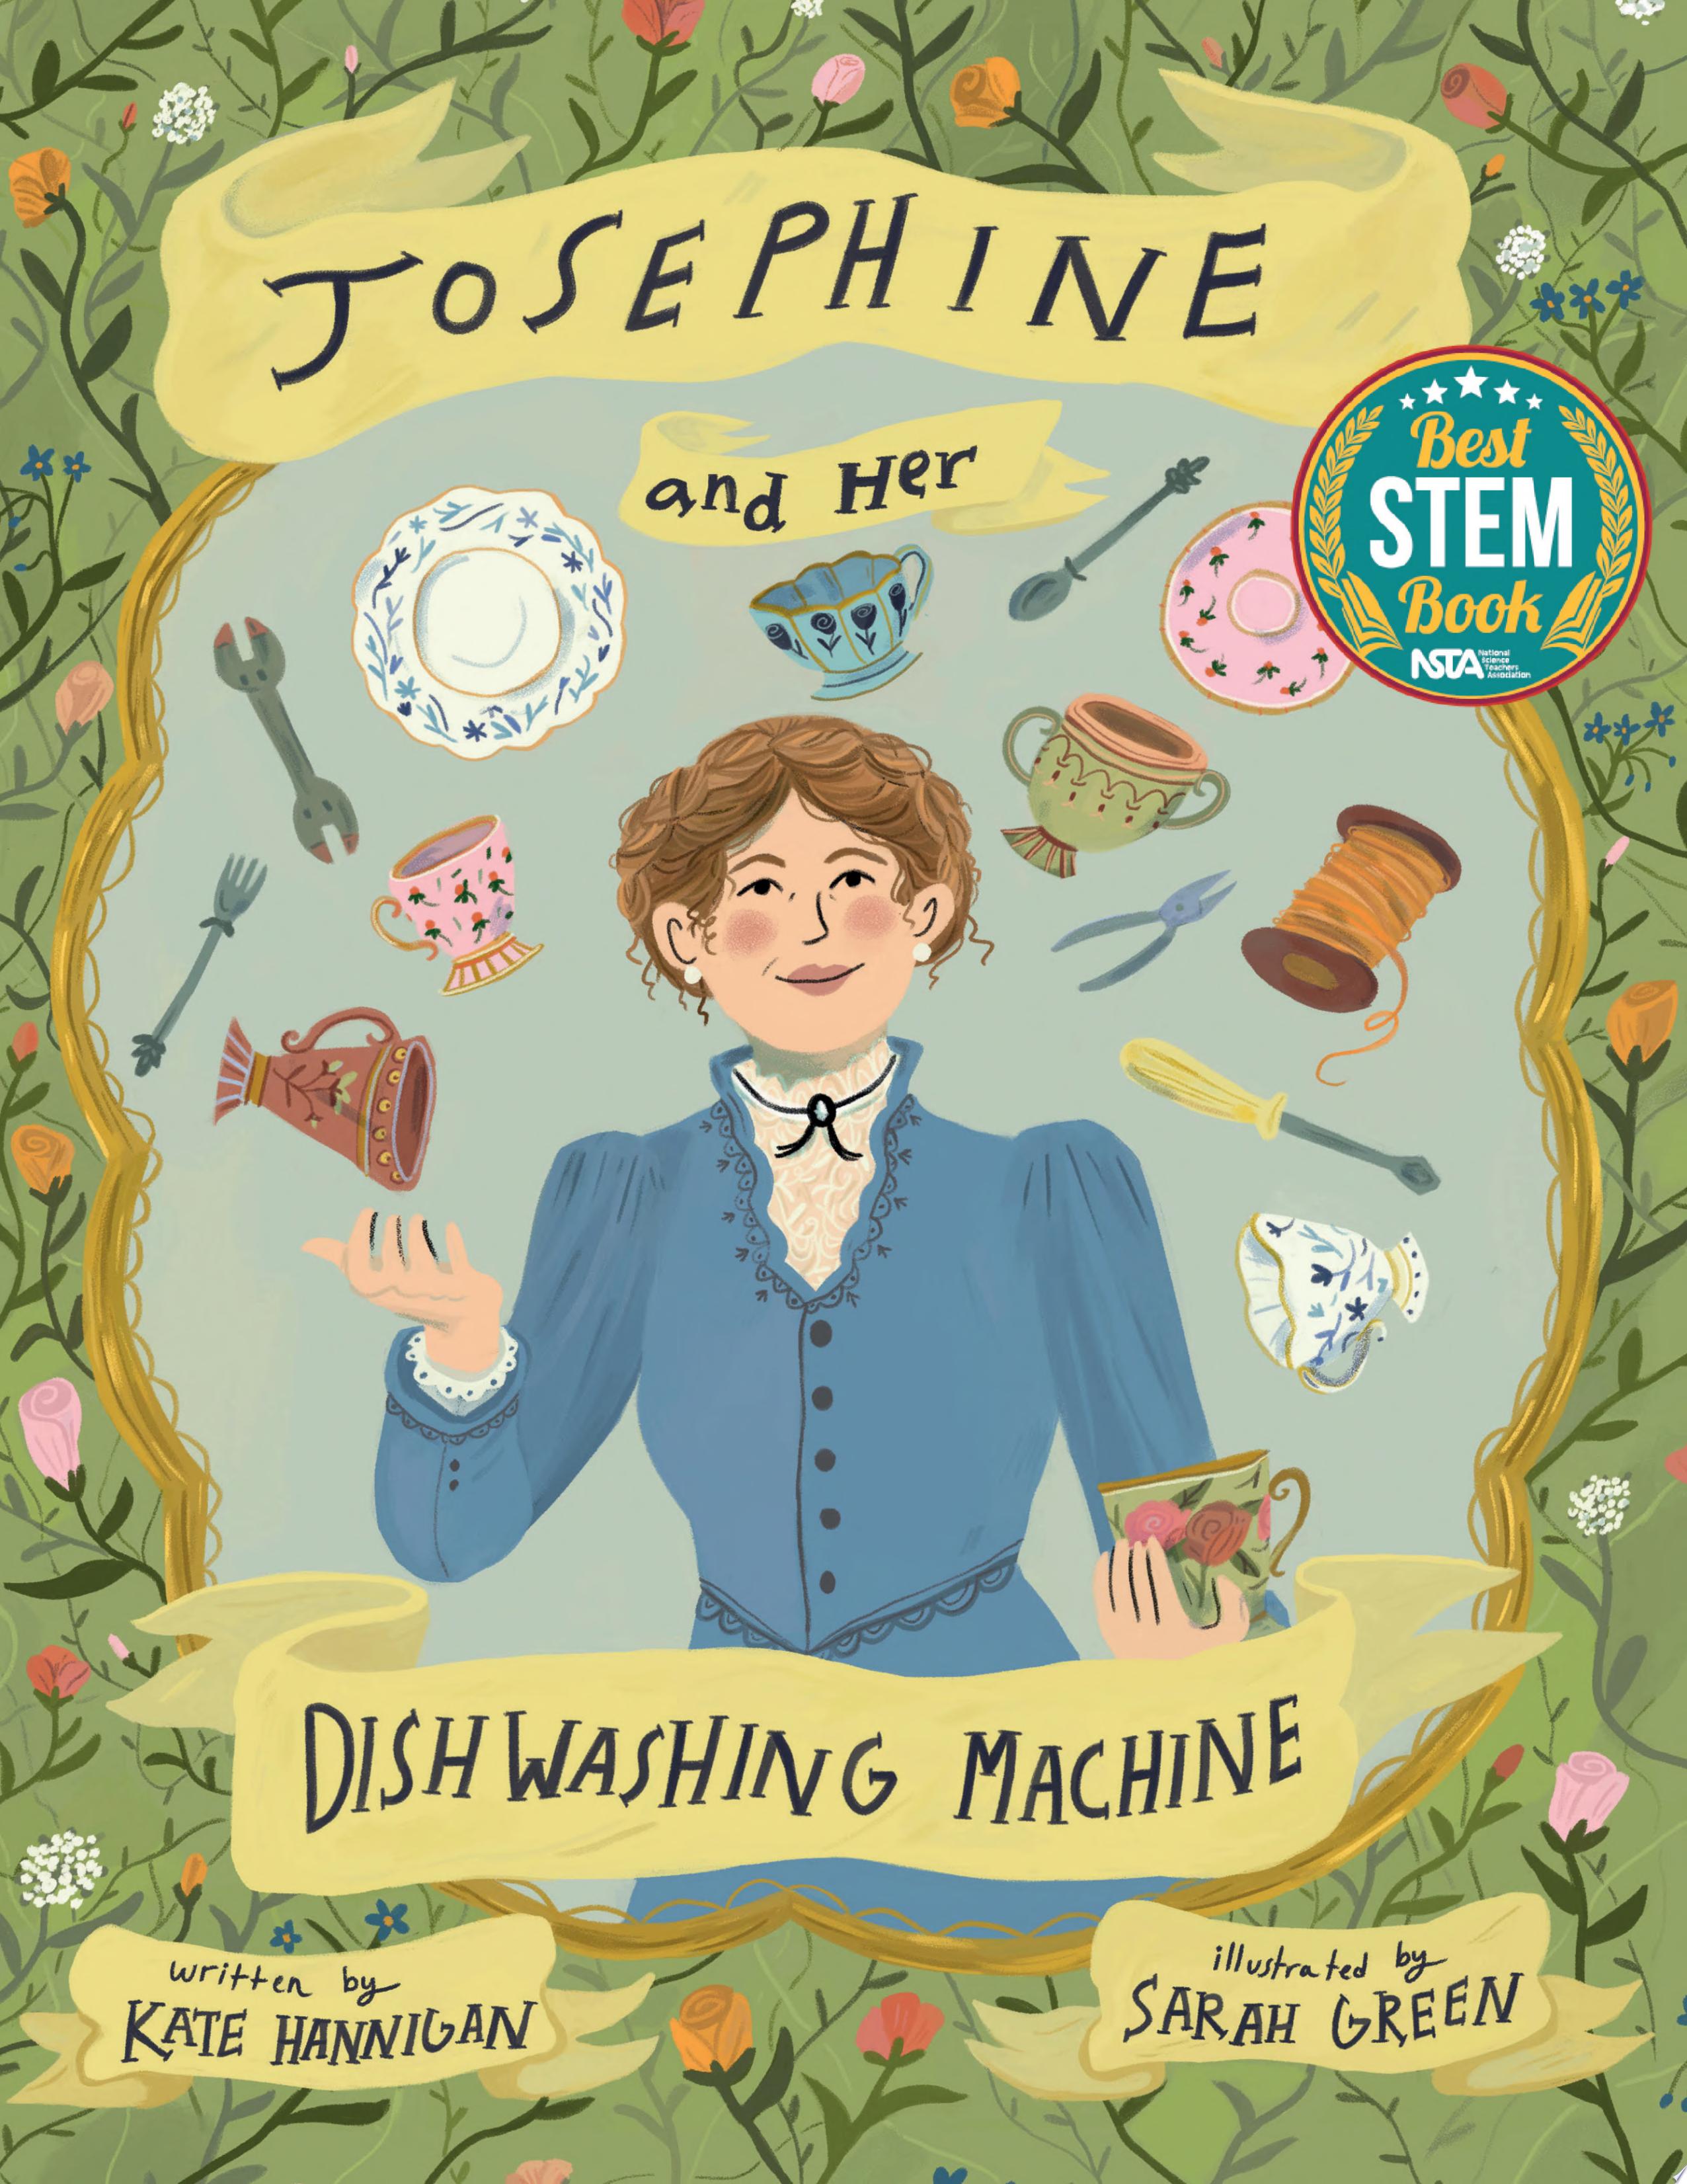 Image for "Josephine and Her Dishwashing Machine"